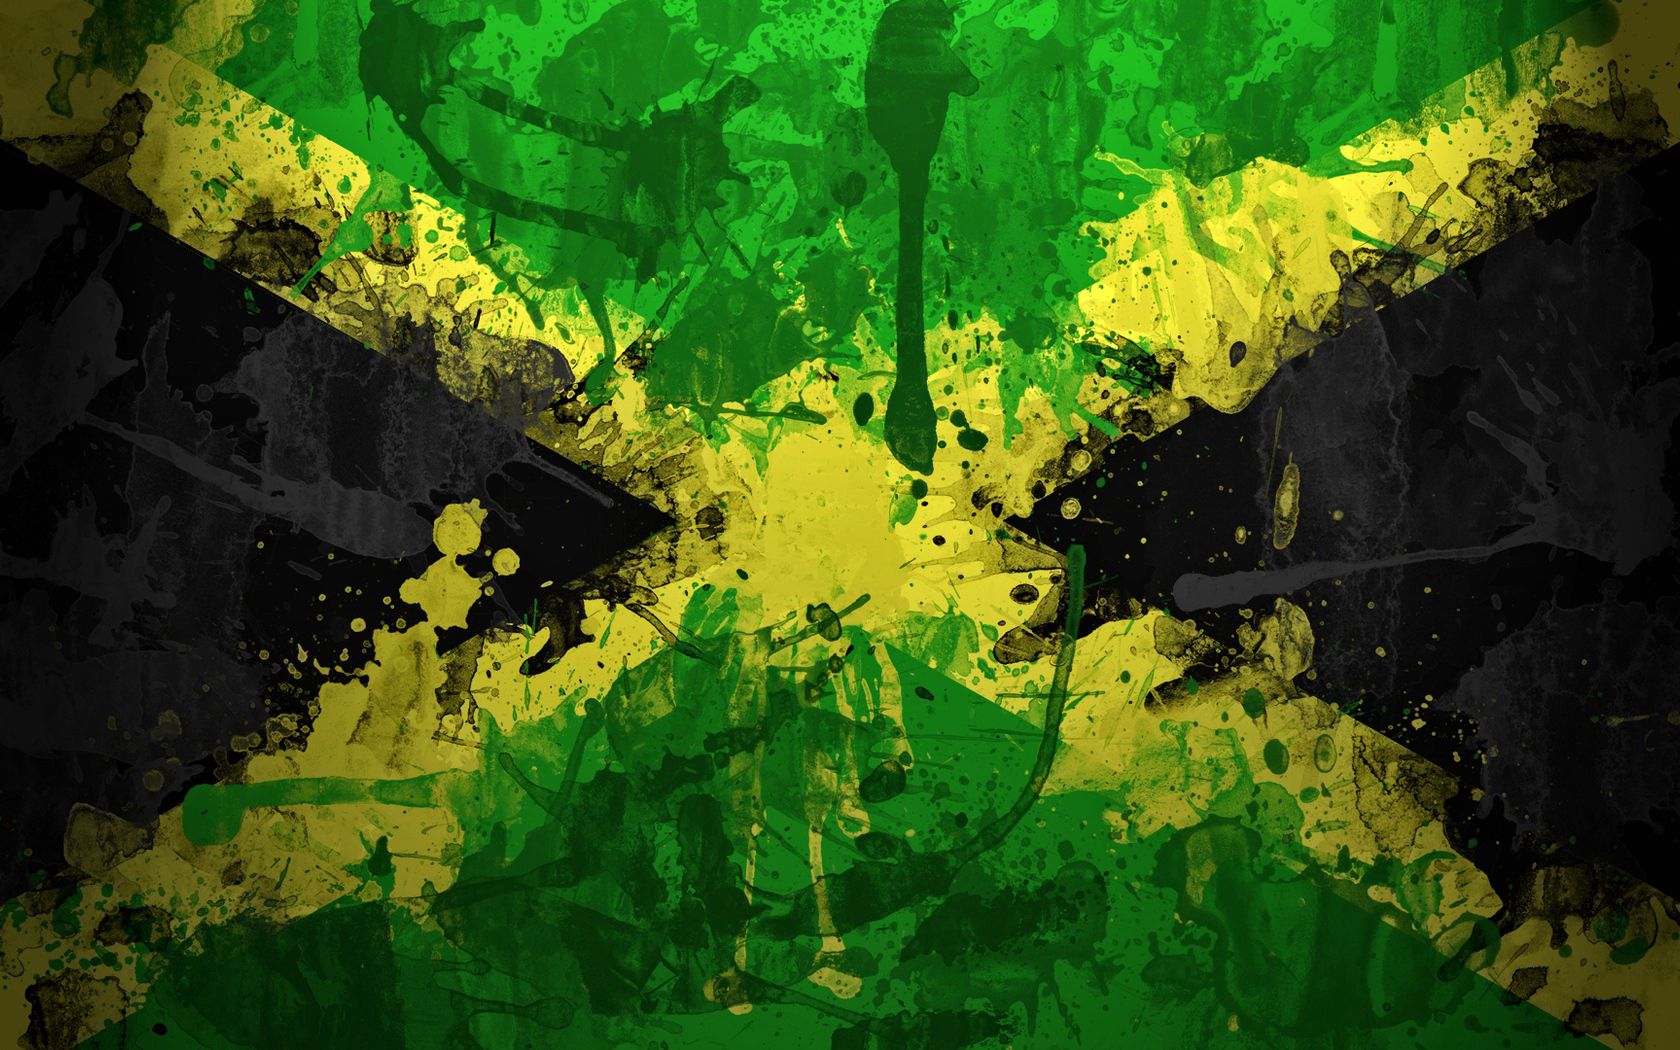 jamaica, background, texture, textures, paint, flag, symbolism